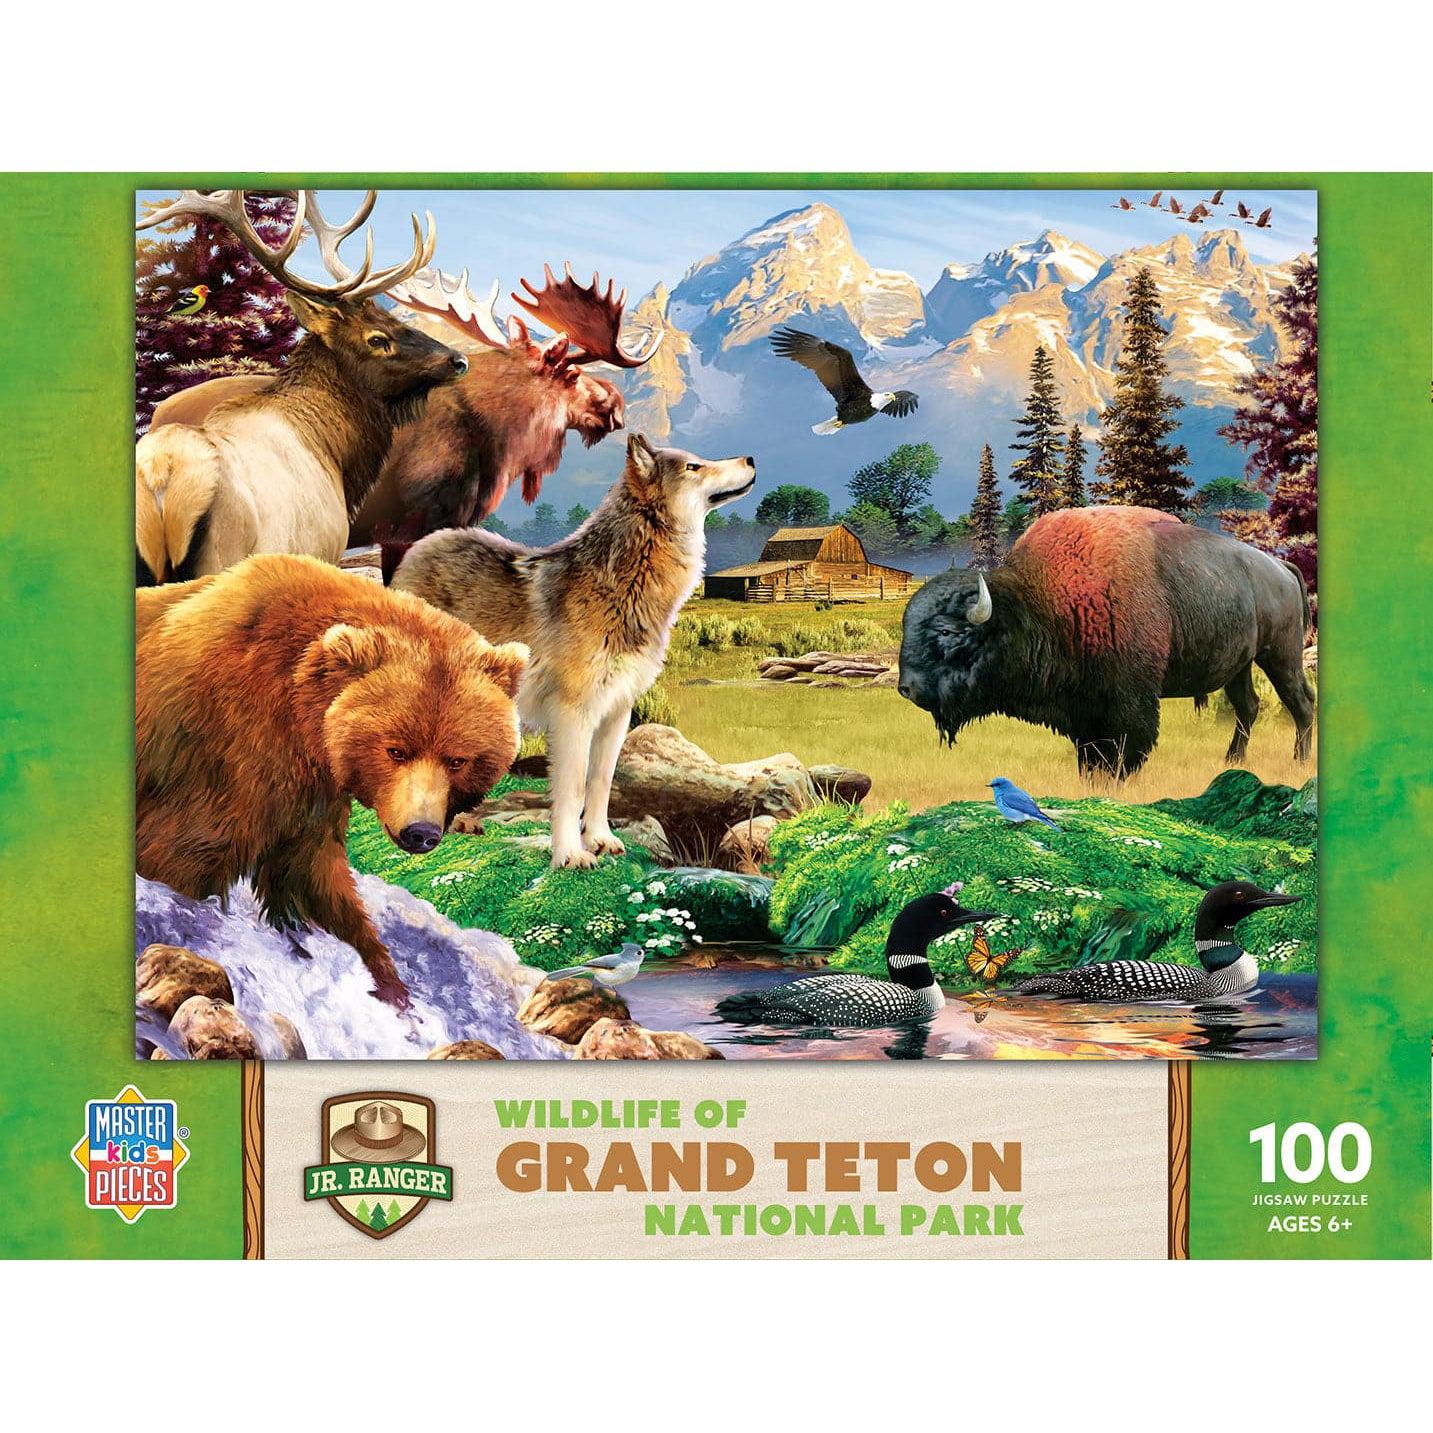 MasterPieces-Jr Ranger - Grand Teton National Park - 100 Piece Puzzle-12116-Legacy Toys